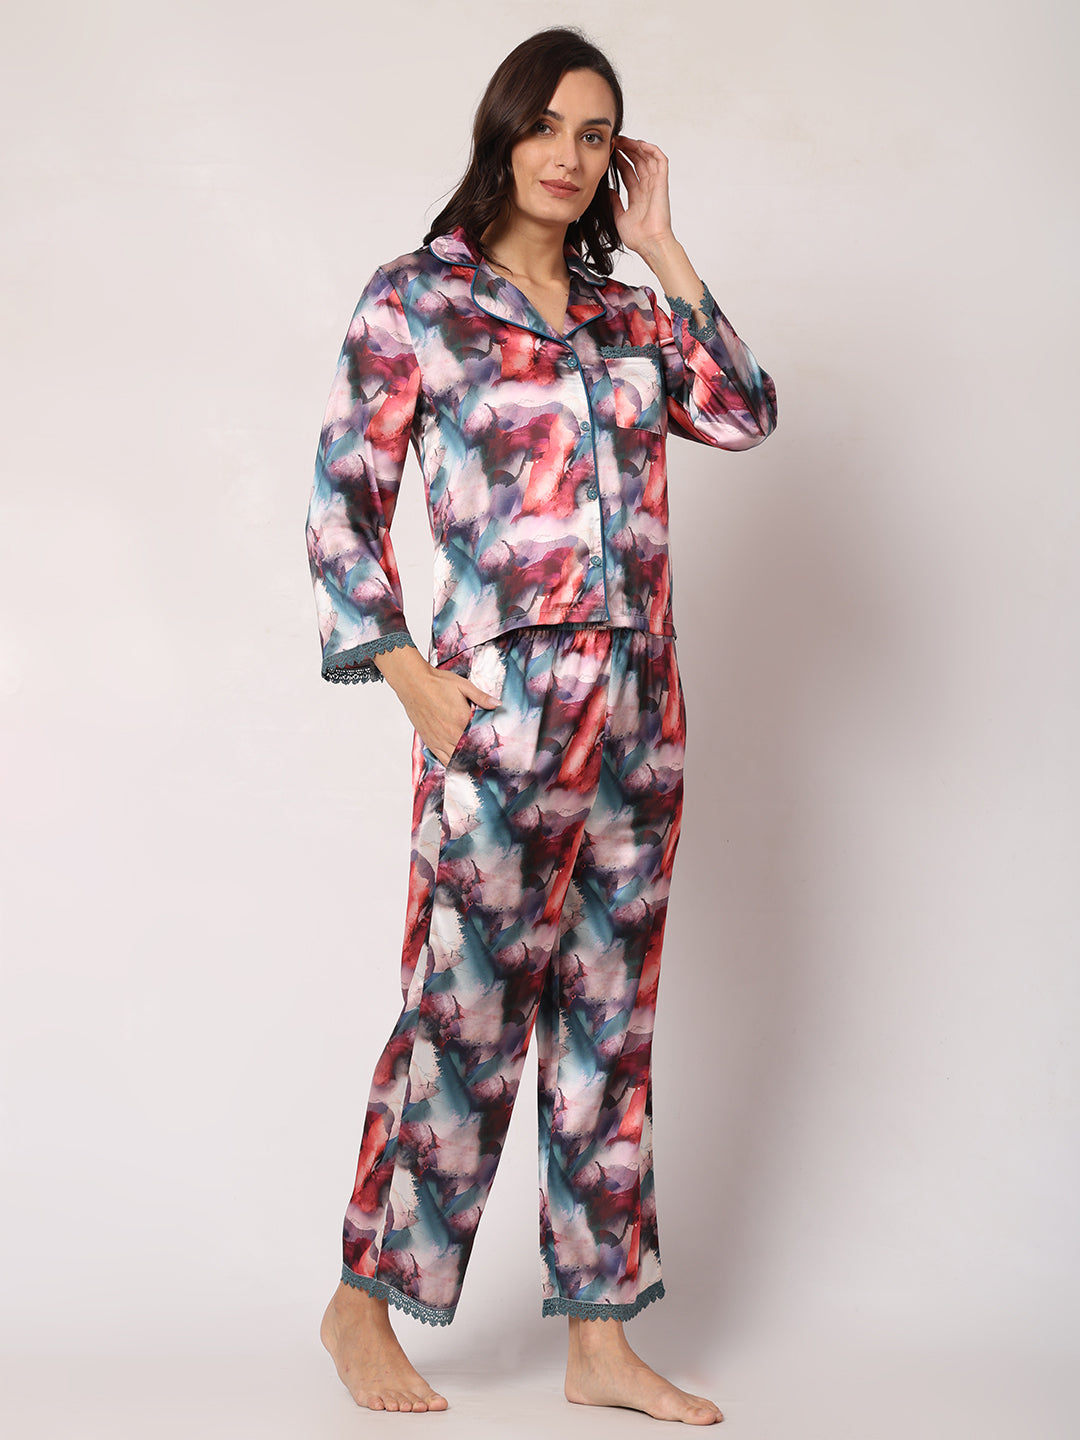 GOCHIKKO Women's Satin Printed Color Night Suit Set of Shirt & Pyjama Pack of 1(Slate Printed)